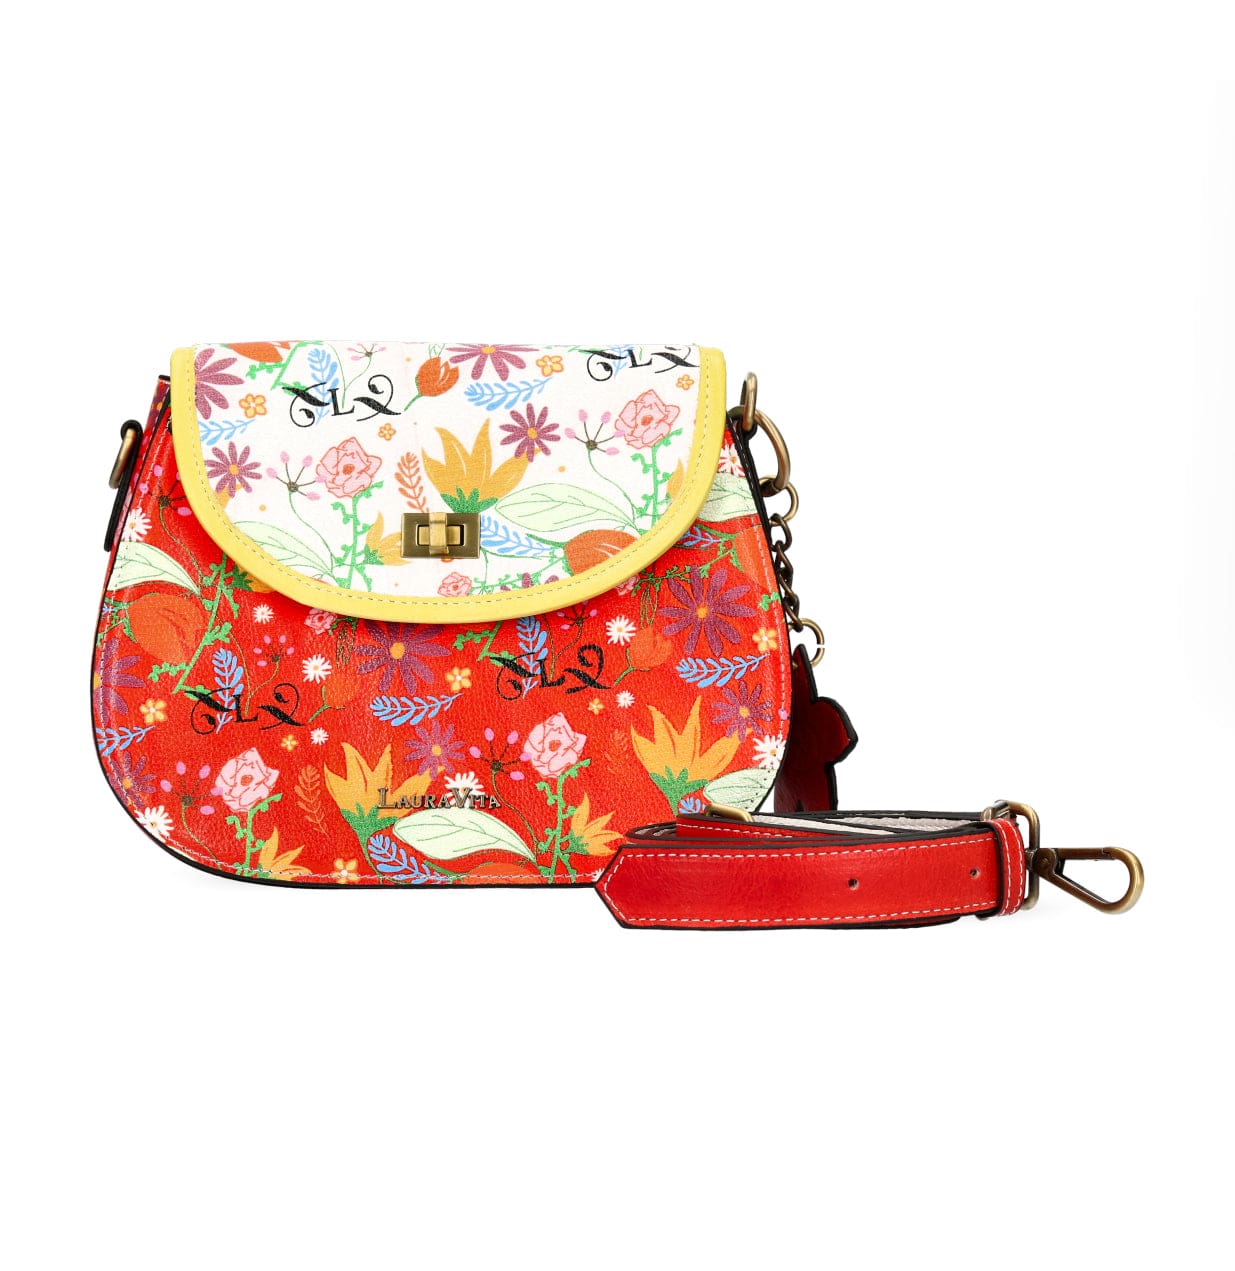 Handbag 4677 - Red - Bag